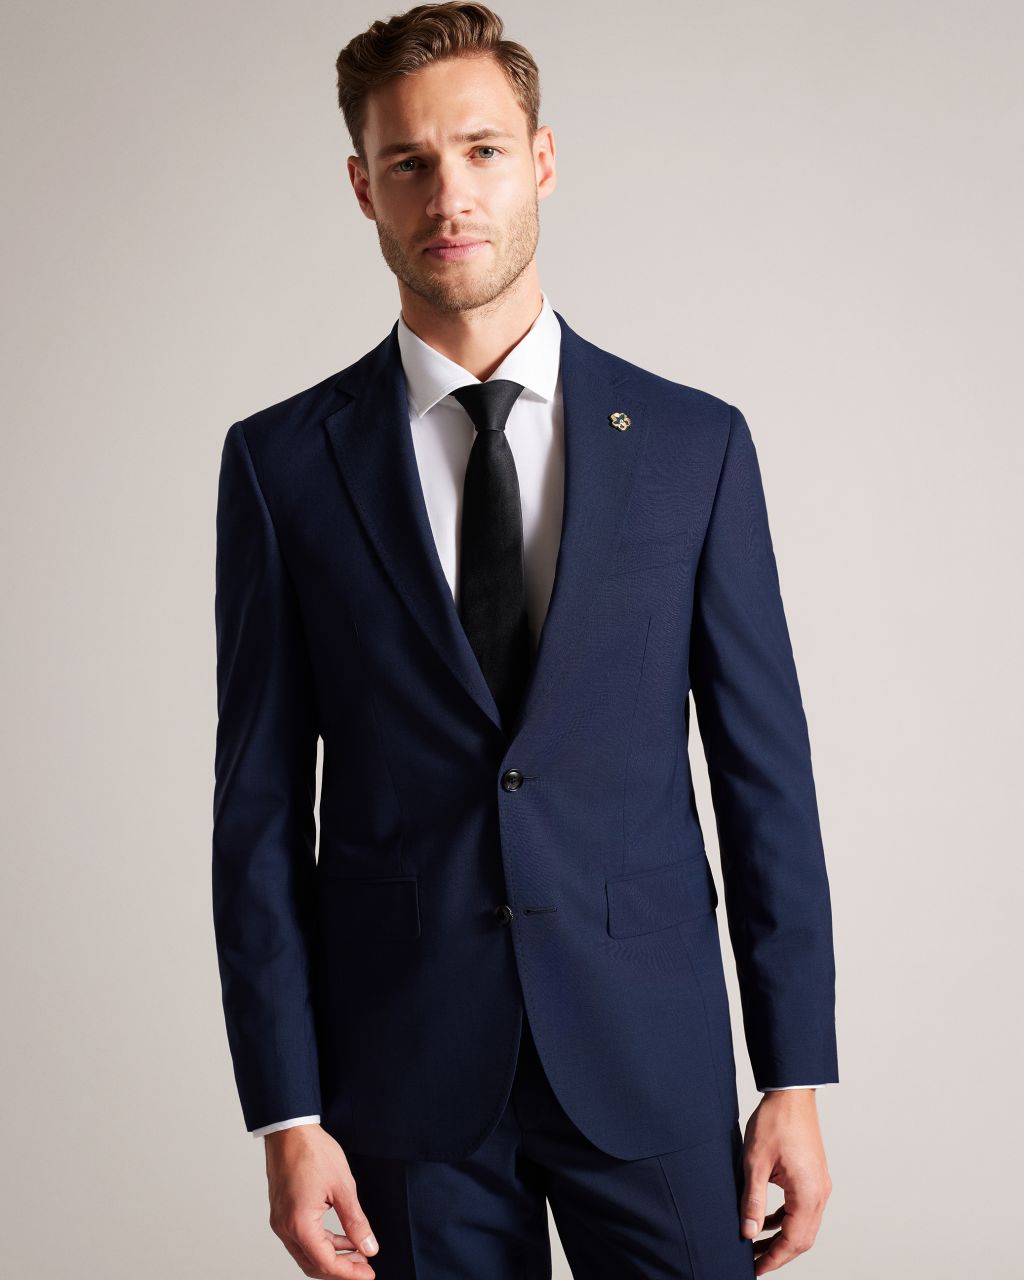 Ted Baker Men's Slim Fit Suit Jacket in Bright Blue, JVJacketbl, Wool